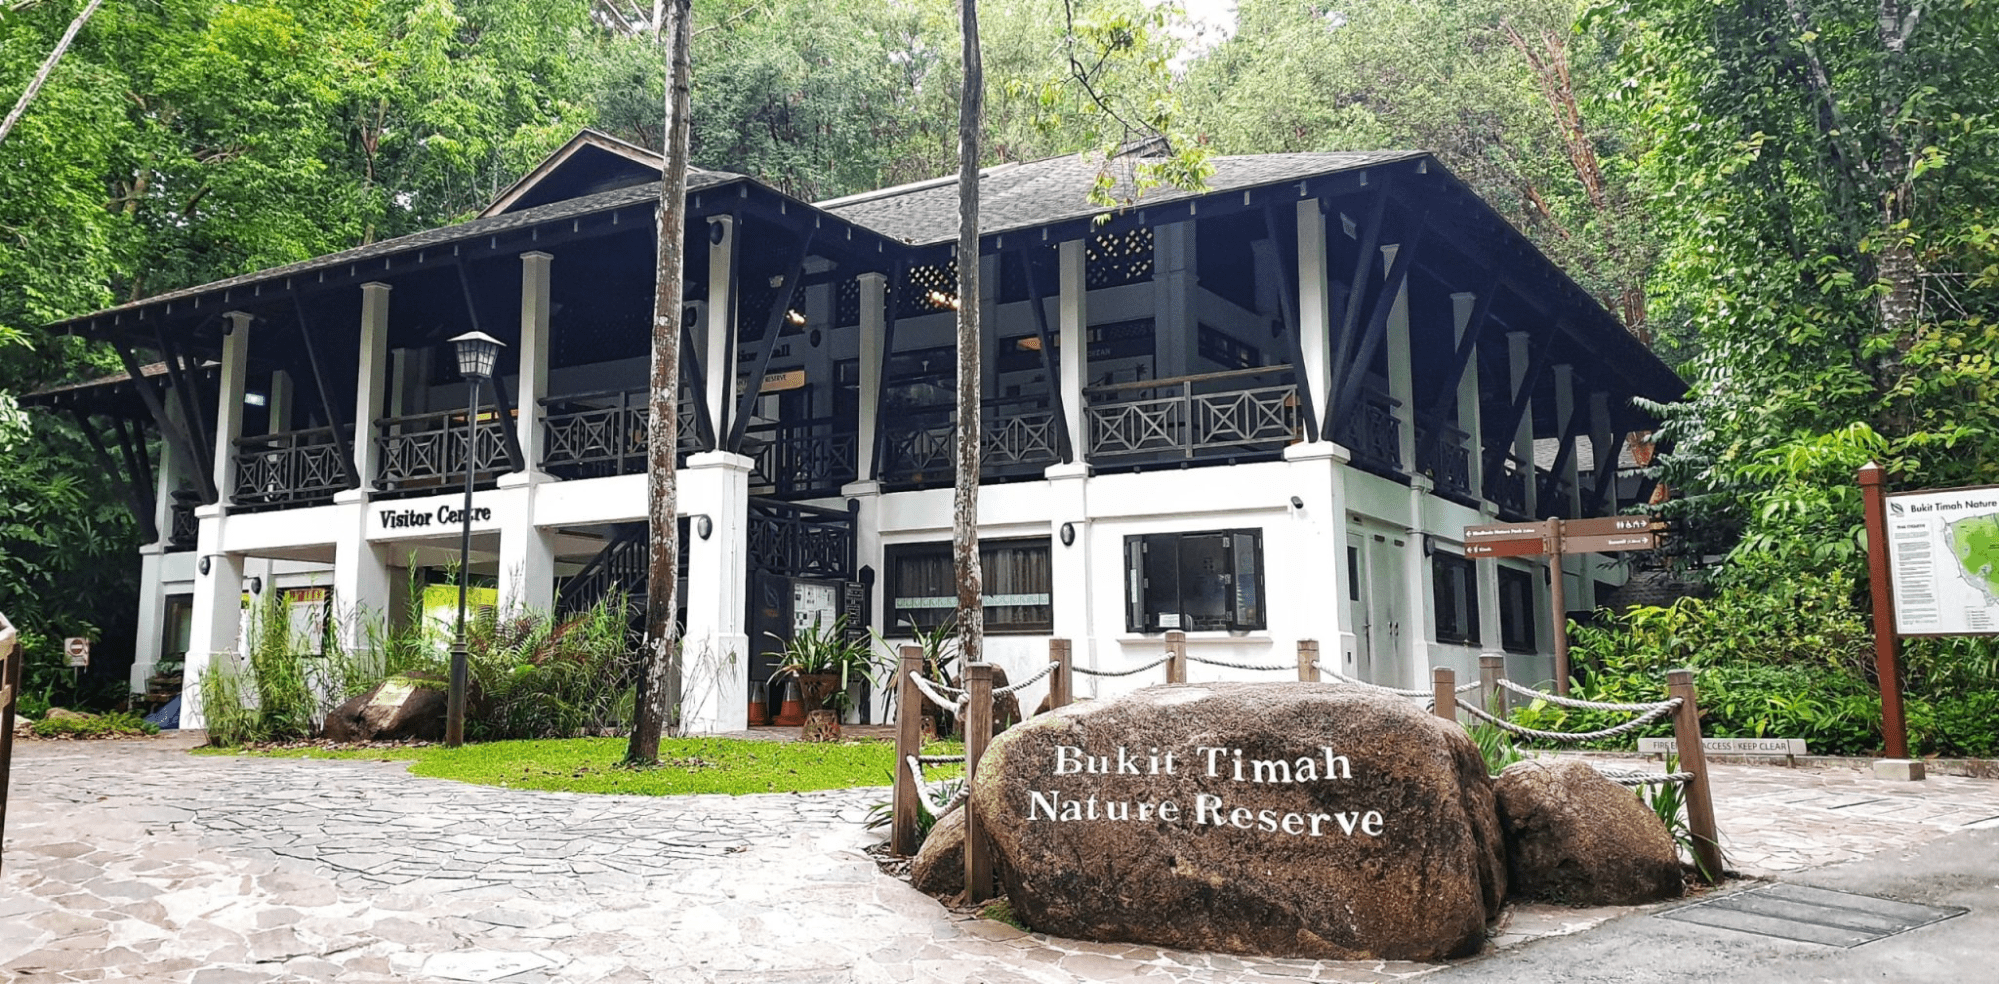 bukit timah nature reserve - visitor centre